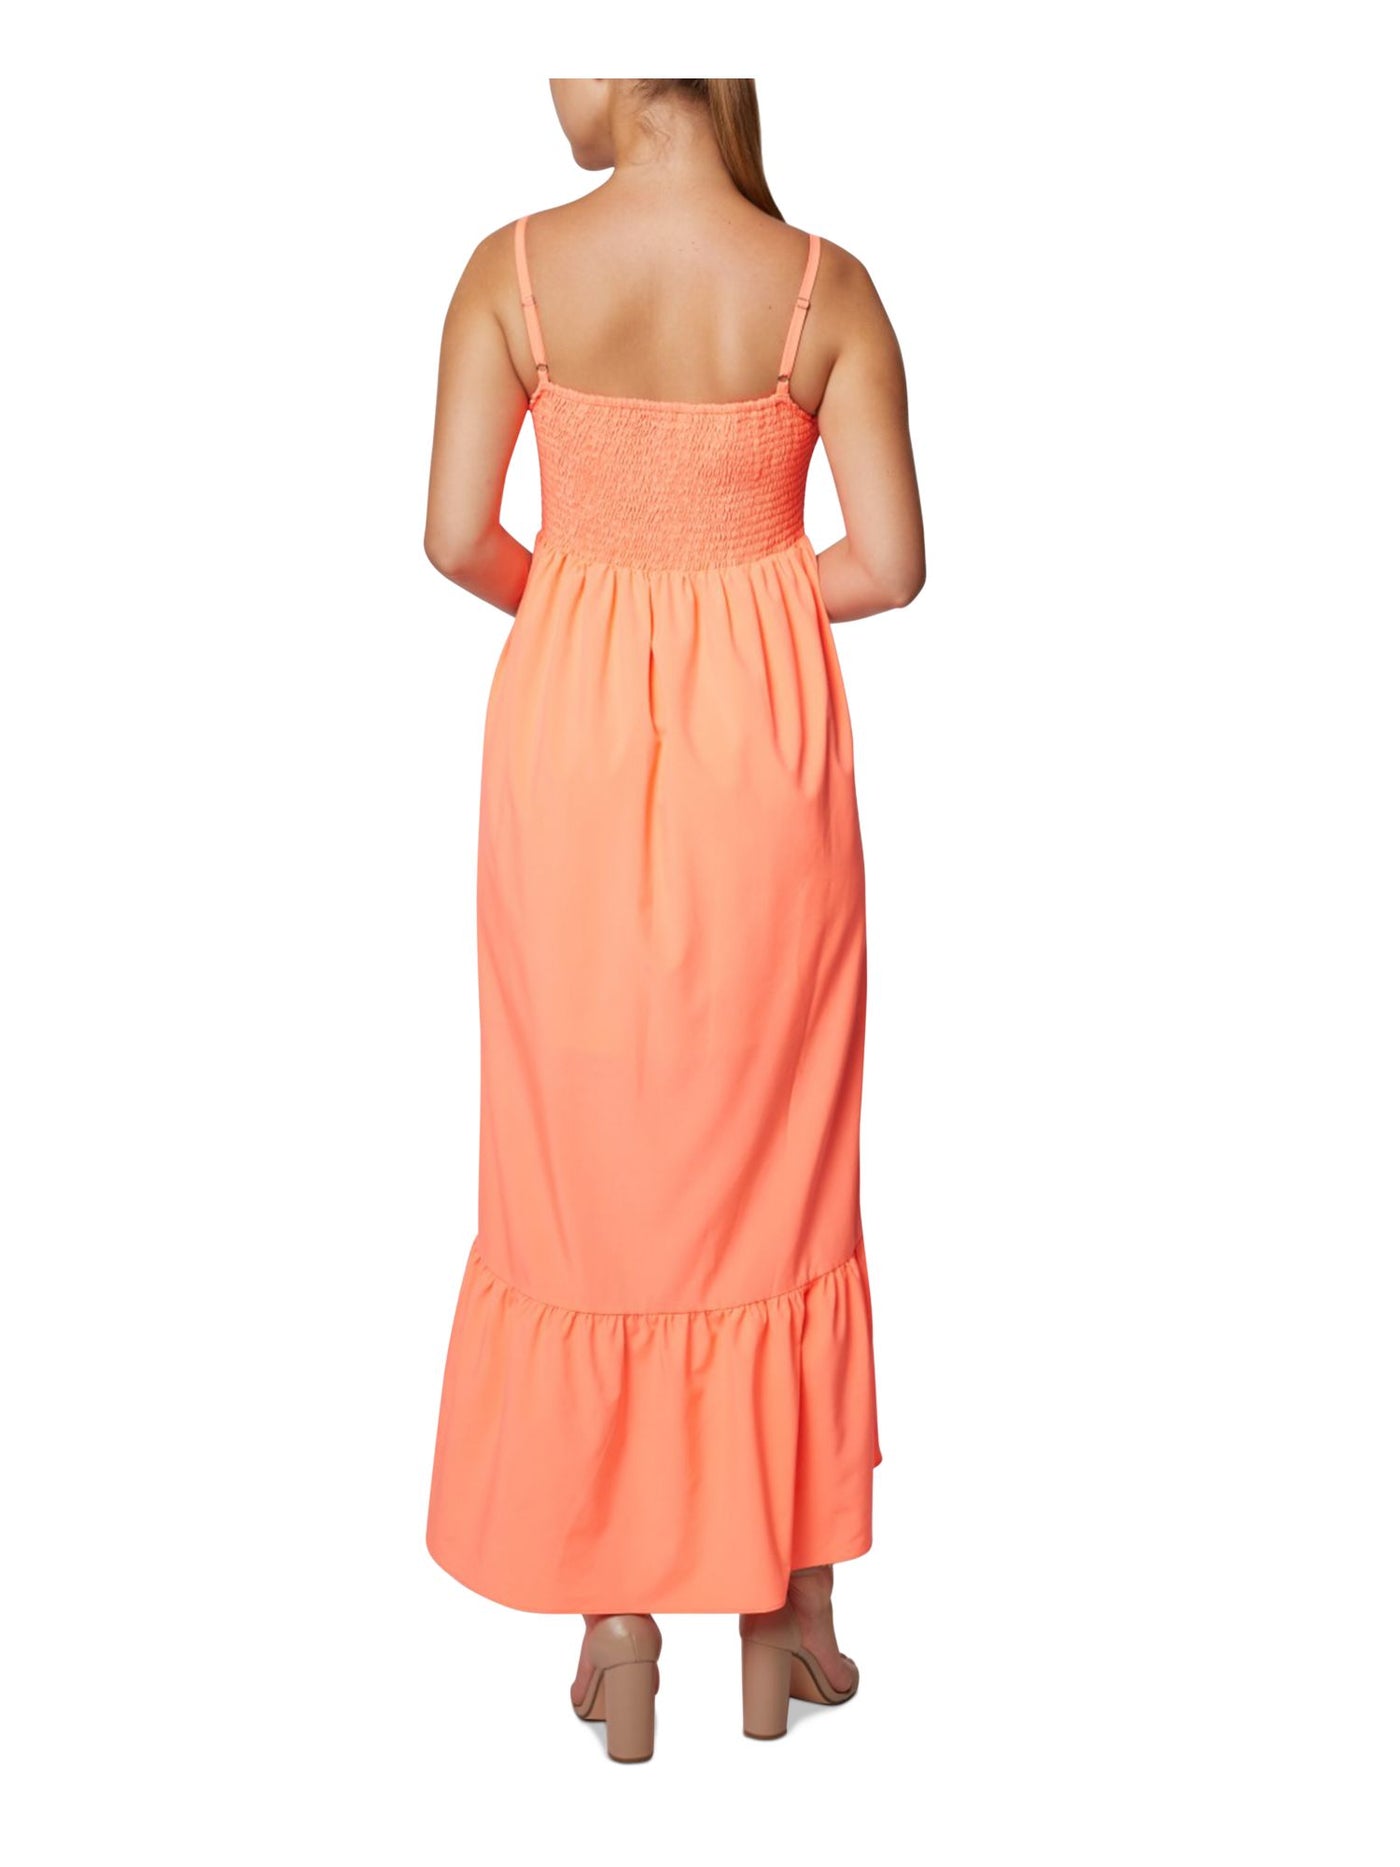 LAUNDRY Womens Orange Smocked Adjustable Partially Lined Spaghetti Strap Square Neck Maxi Hi-Lo Dress 6